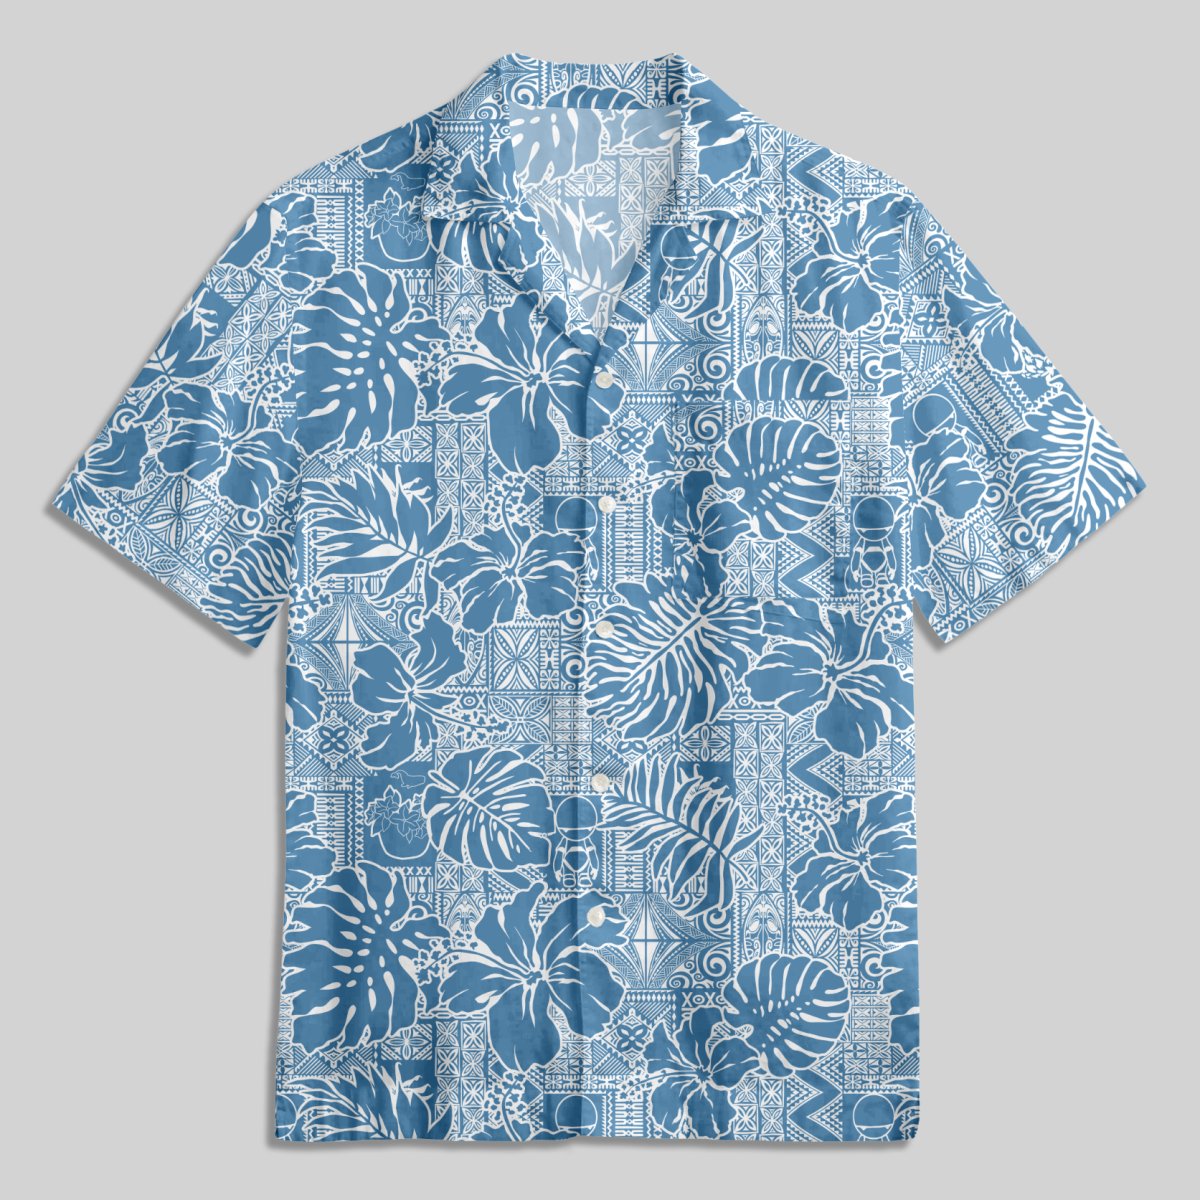 No Hope Hawaiian Pattern Button Up Pocket Shirt - Geeksoutfit